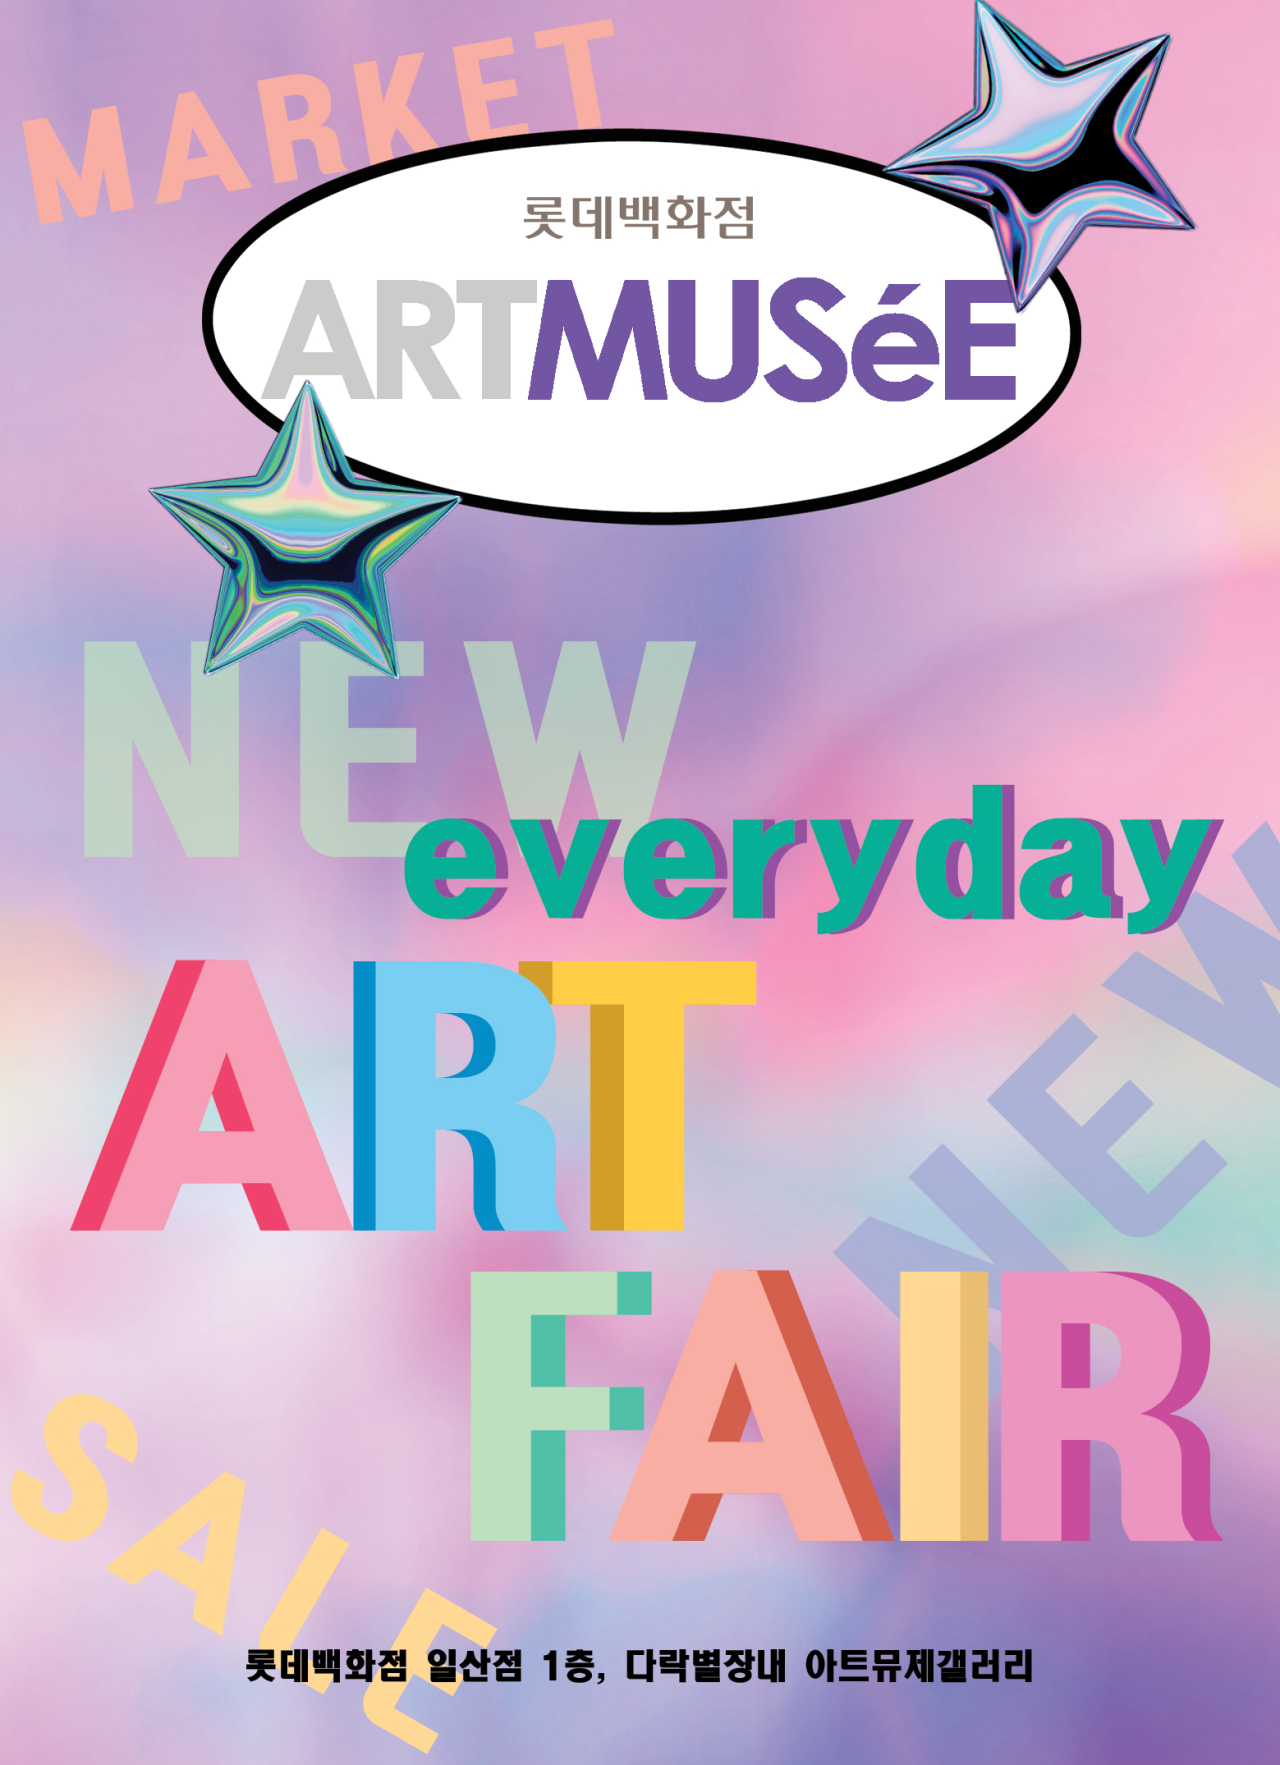 Everyday New Art Fair